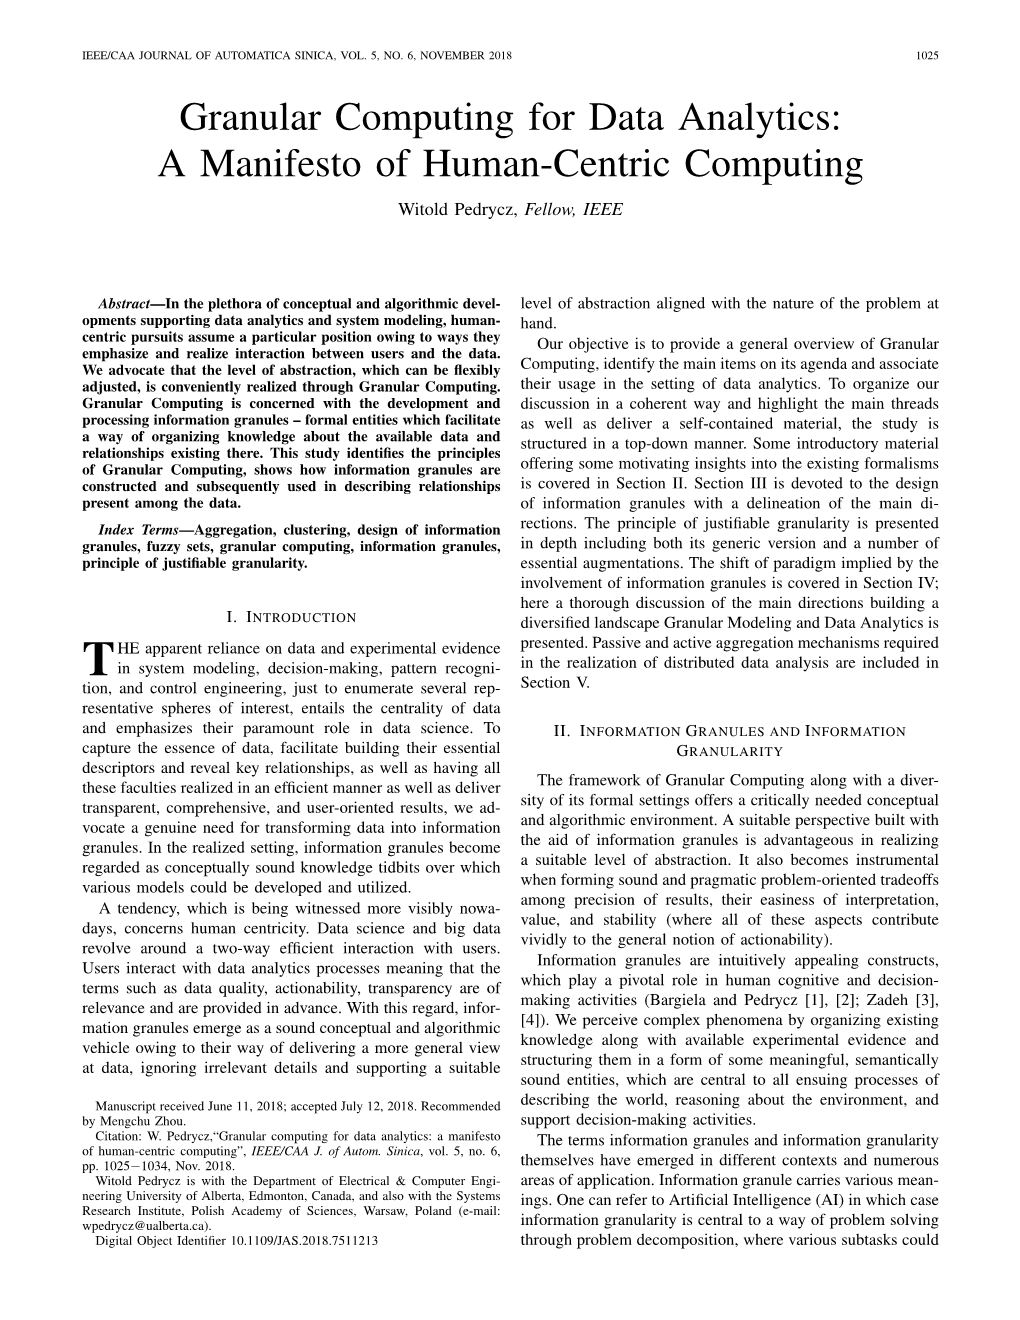 Granular Computing for Data Analytics: a Manifesto of Human-Centric Computing Witold Pedrycz, Fellow, IEEE